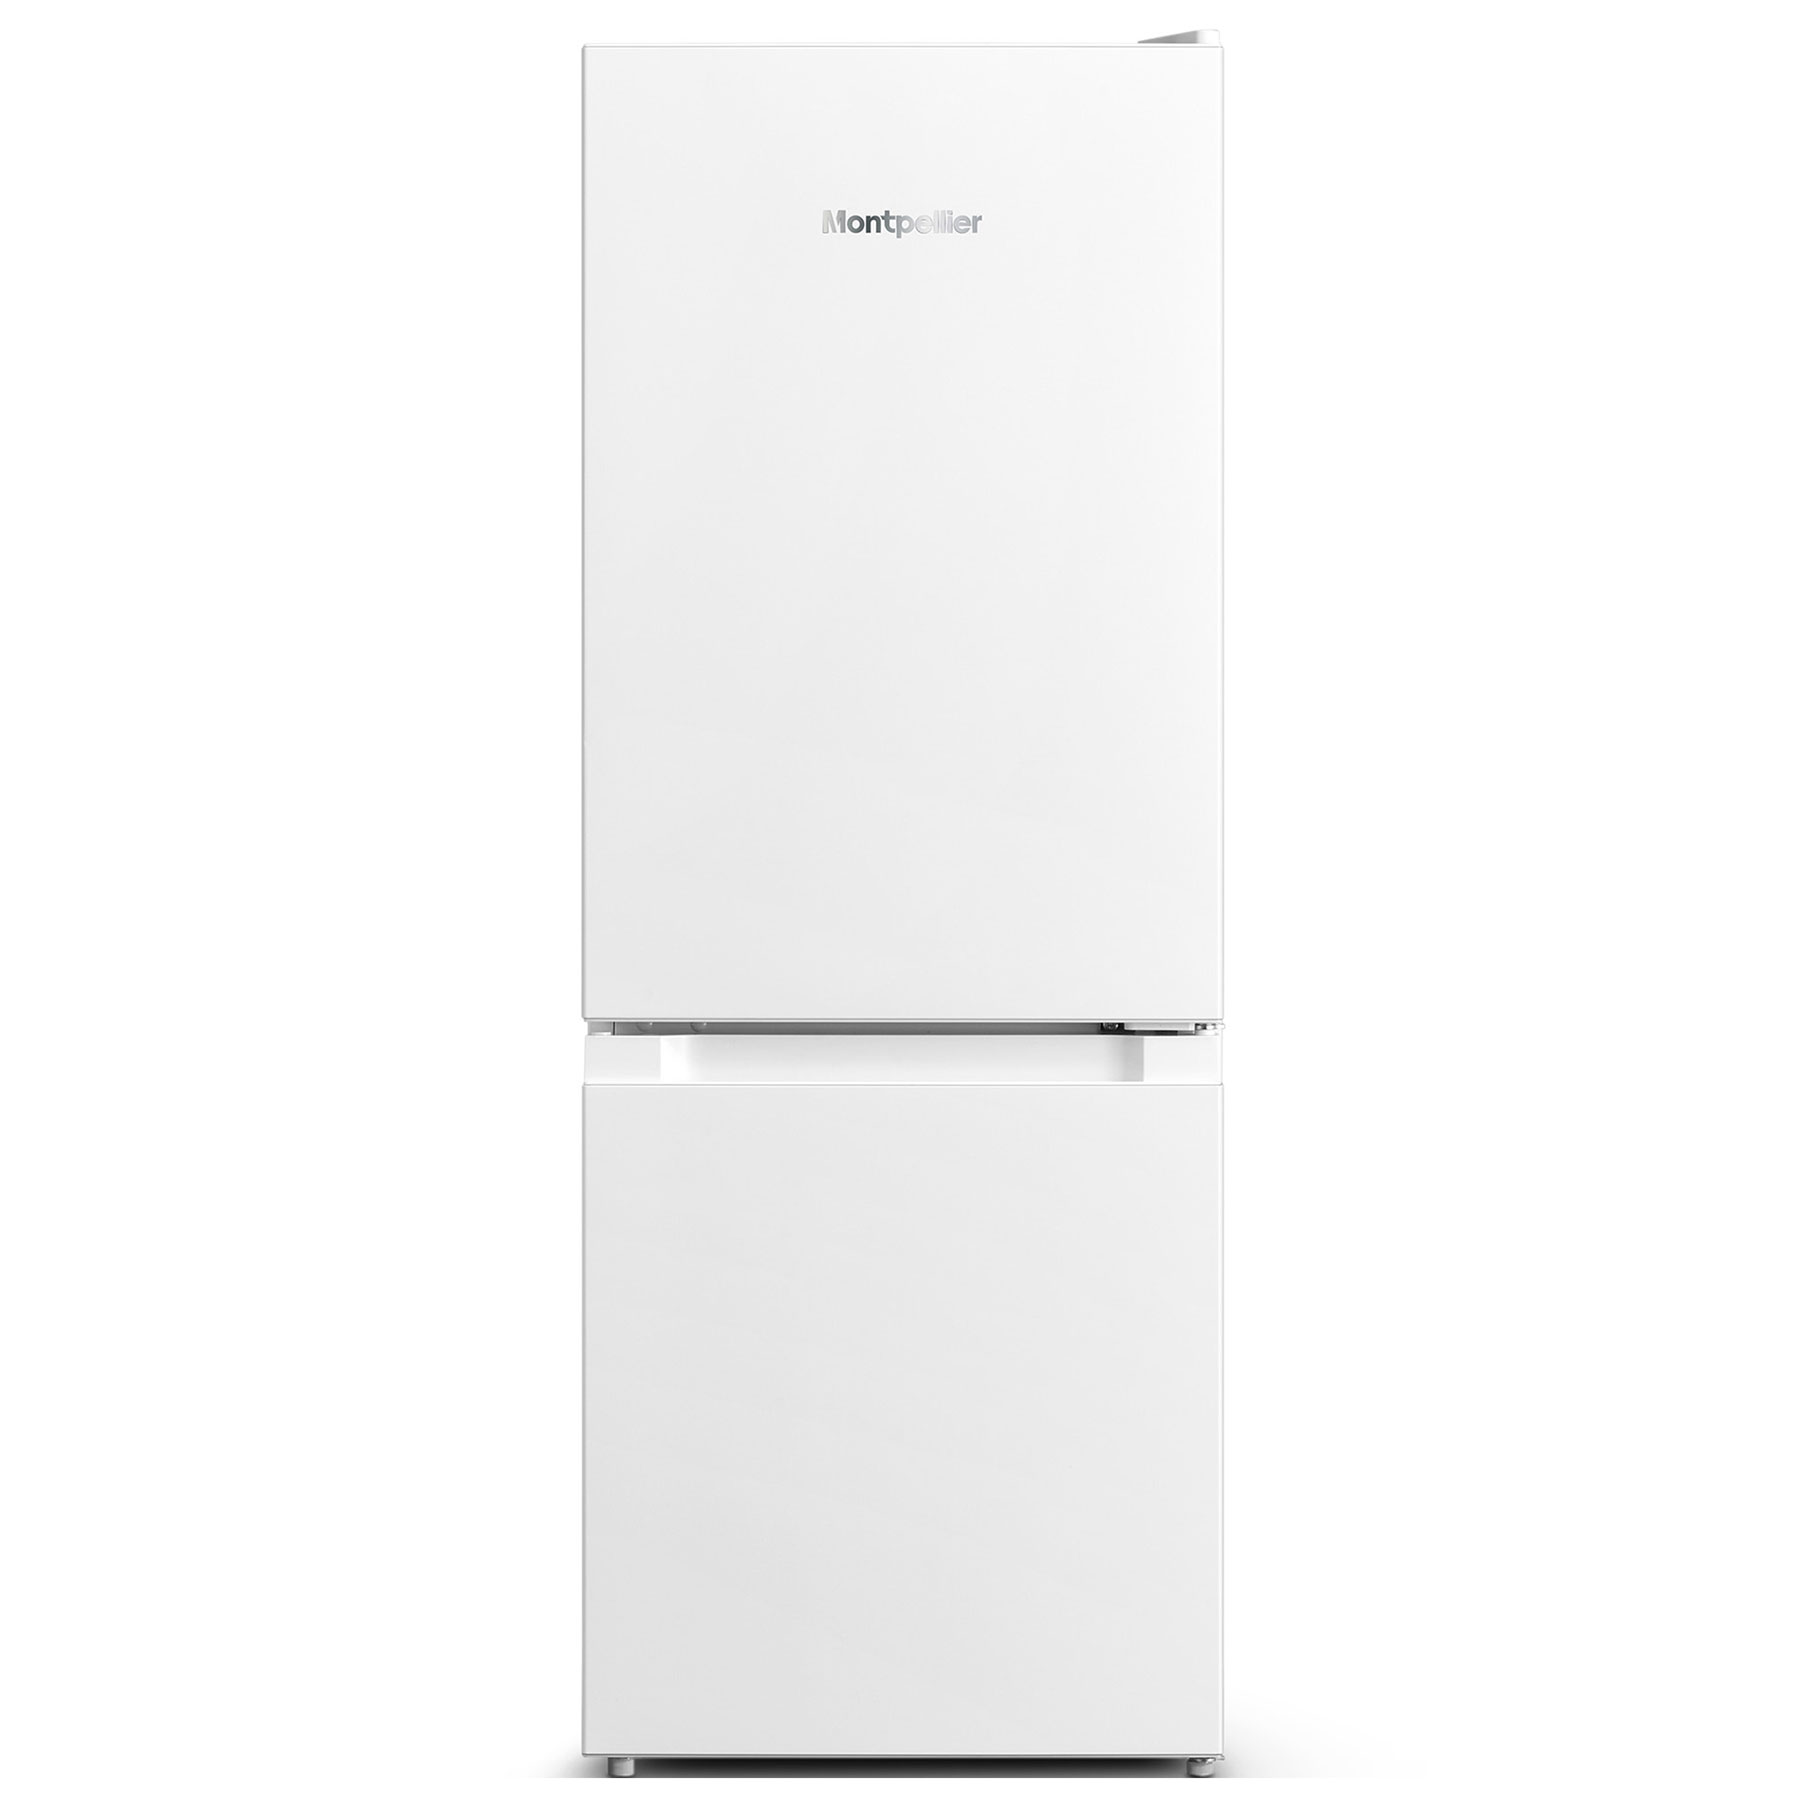 Photos - Freezer Montpellier MS125W 47cm Fridge  in White 1 24m 91 42L 